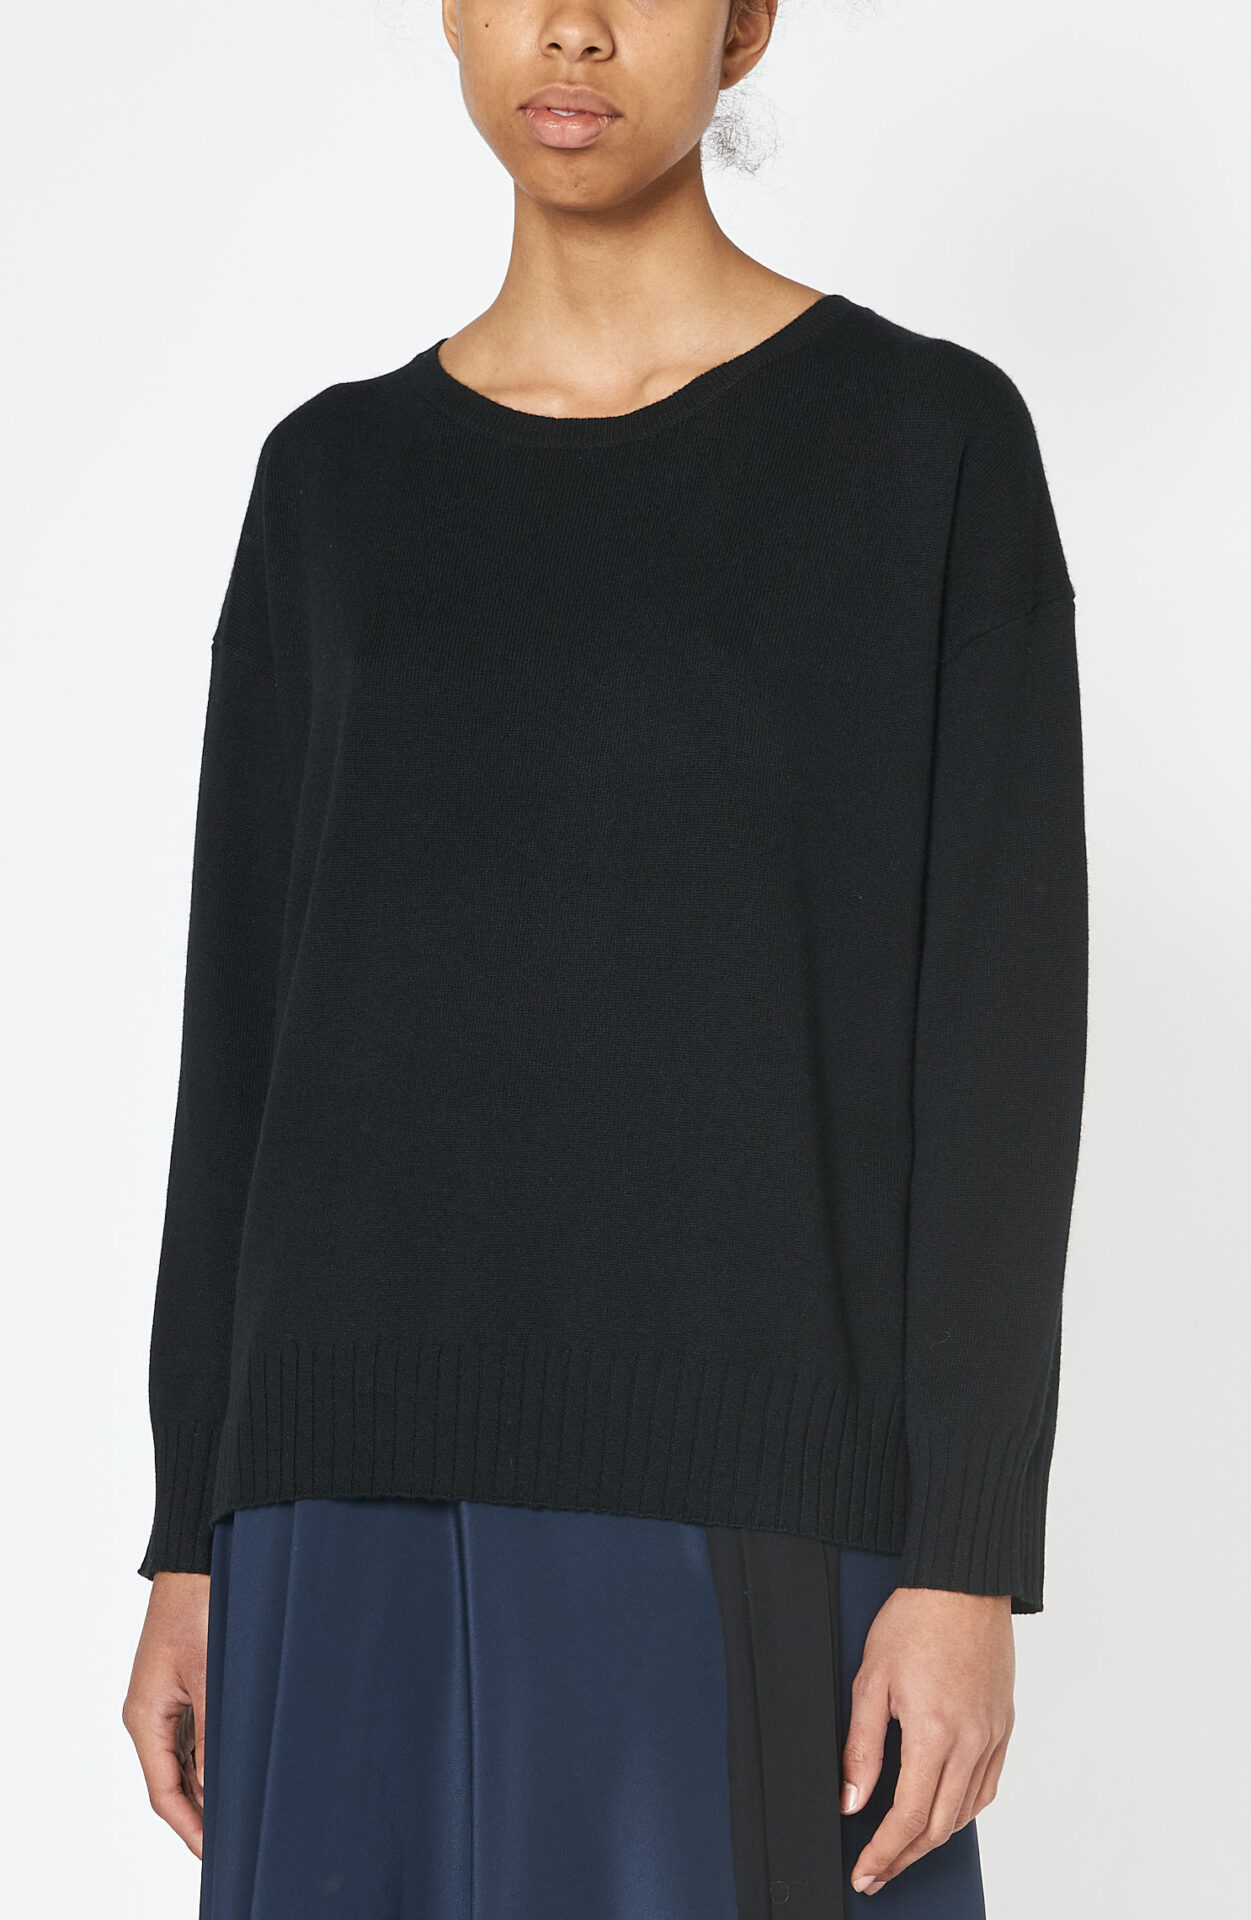 Nili Lotan - Black cashmere sweater 